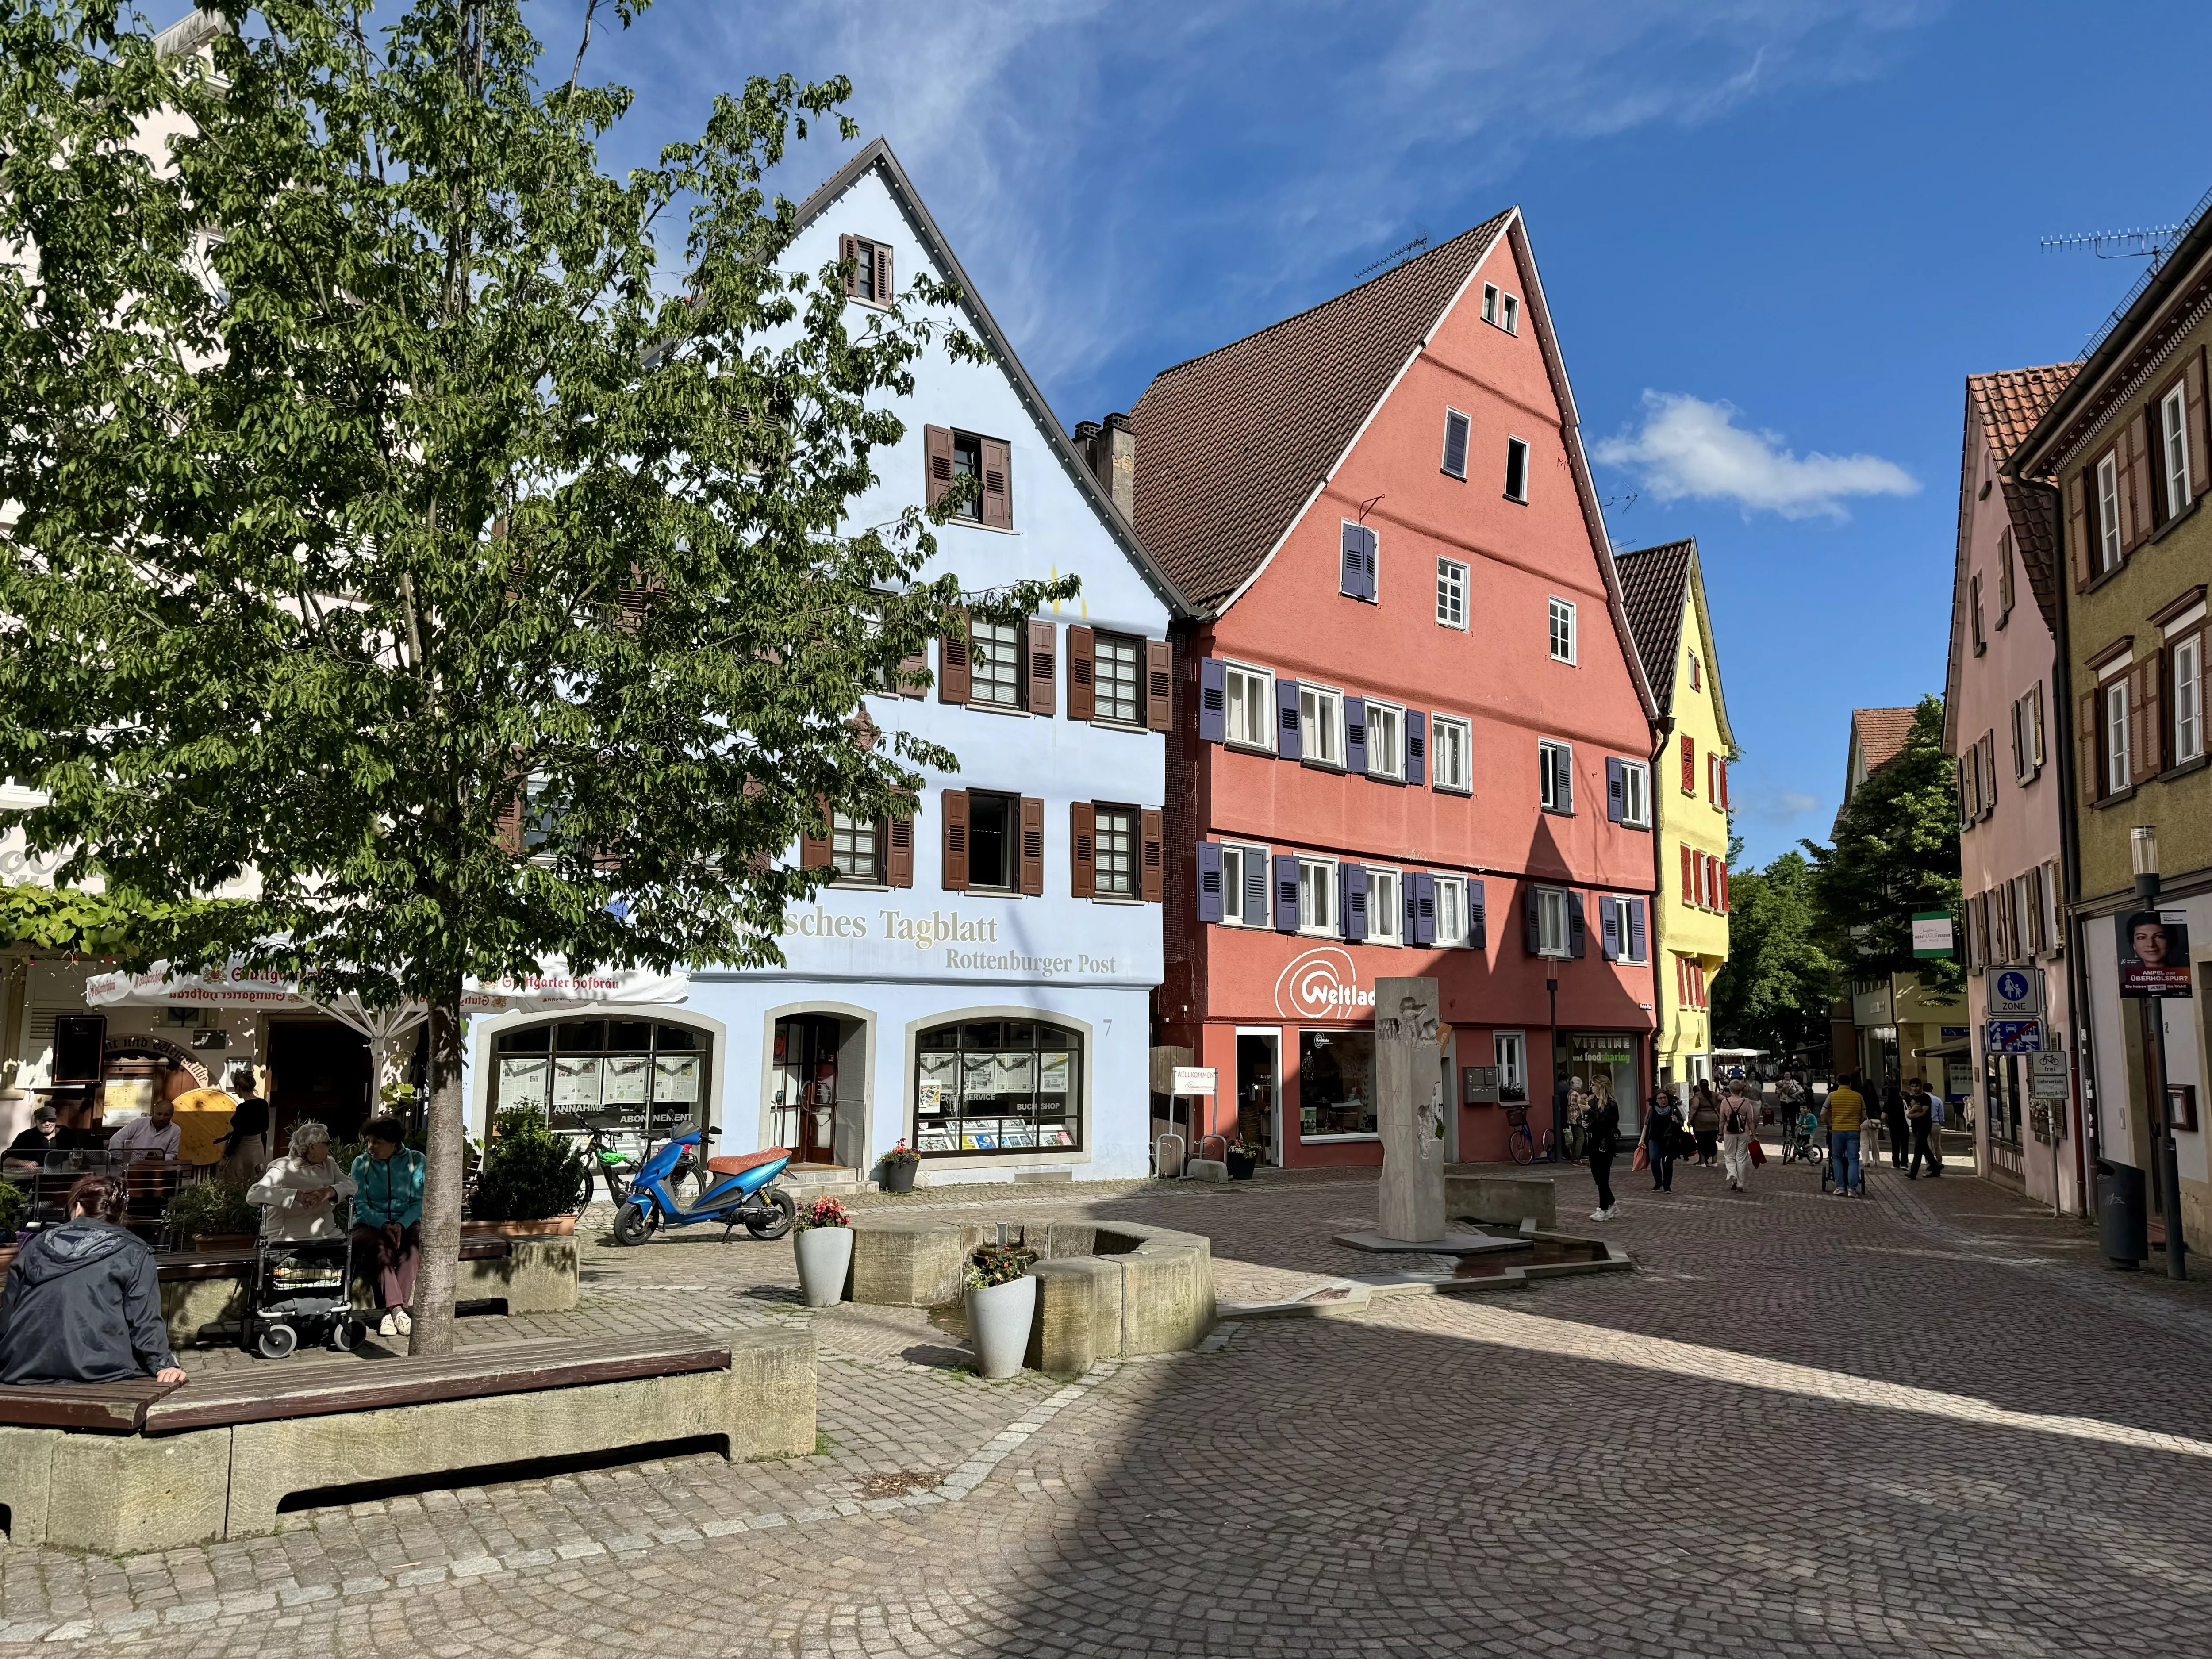 Rottenburg am Neckar, Germany